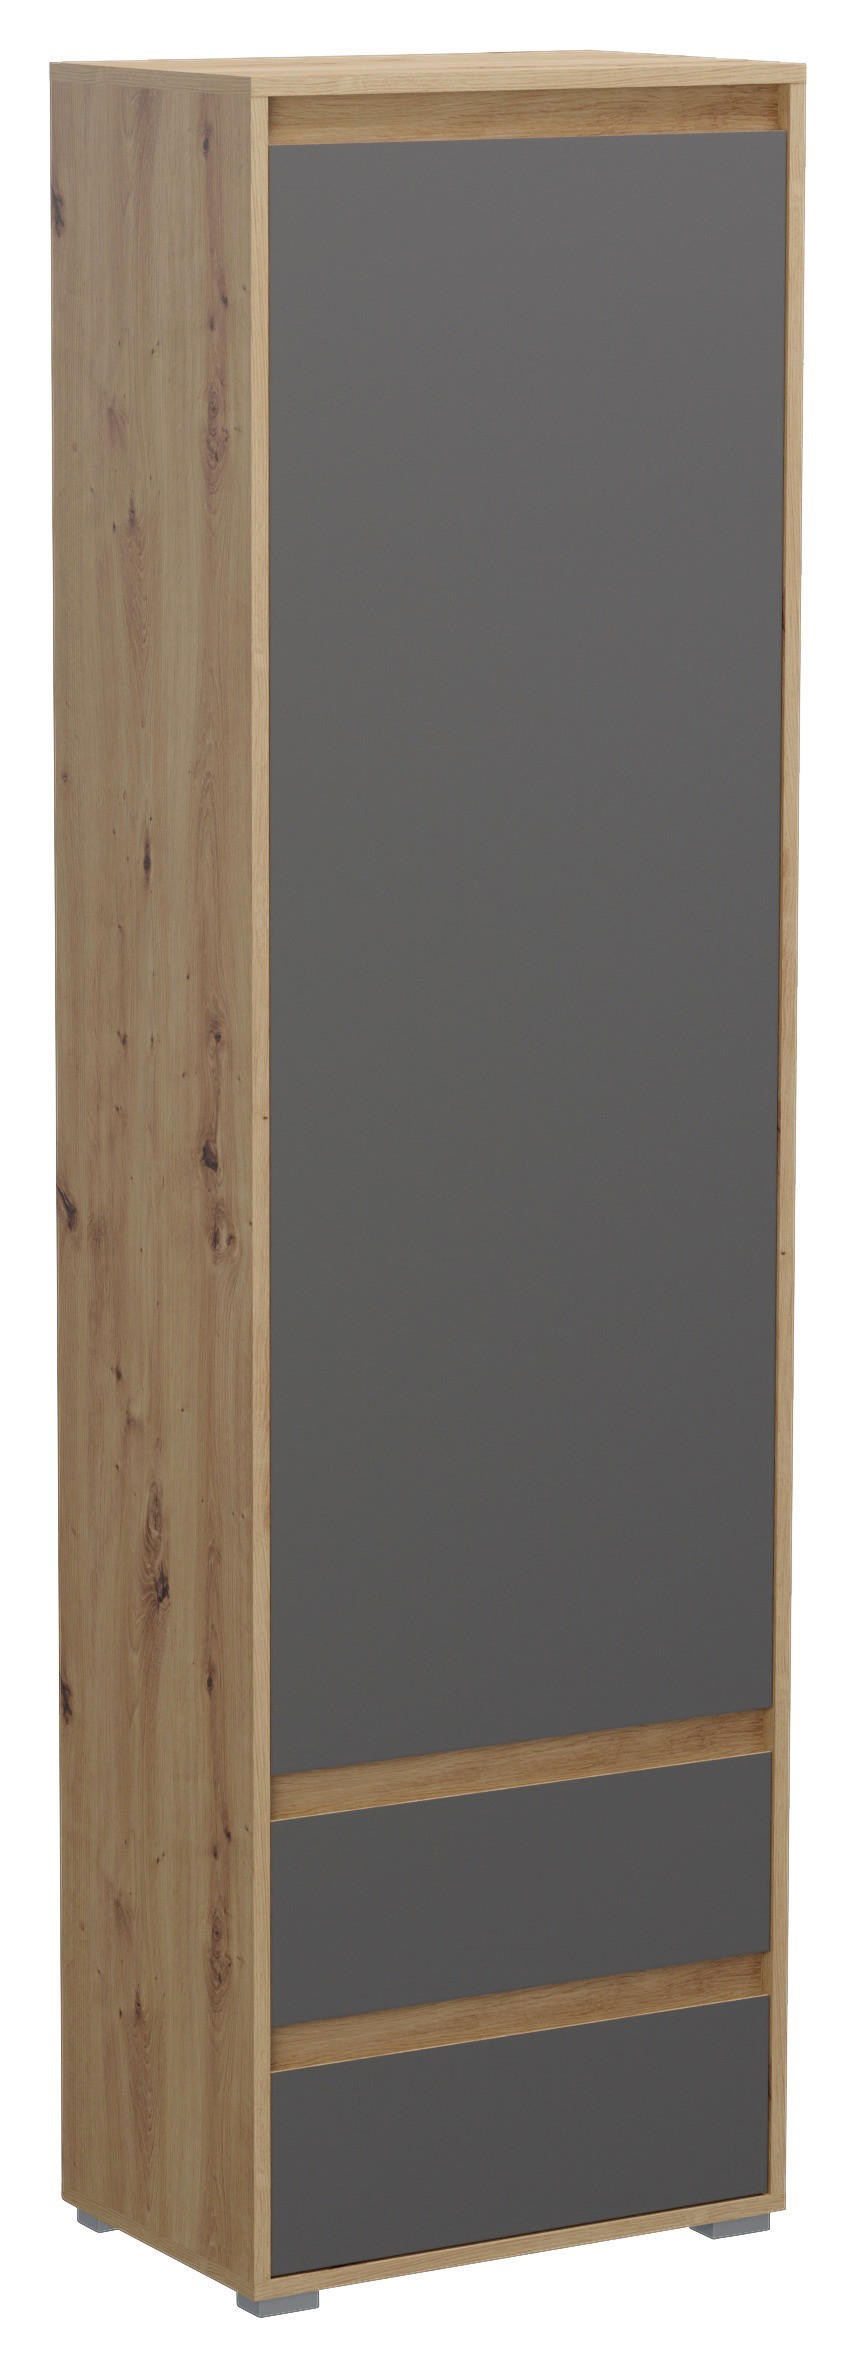 MID.YOU SKŘÍŇ NA ODĚV, šedá, dub artisan, 54/190/35 cm - šedá,dub artisan - kompozitní dřevo